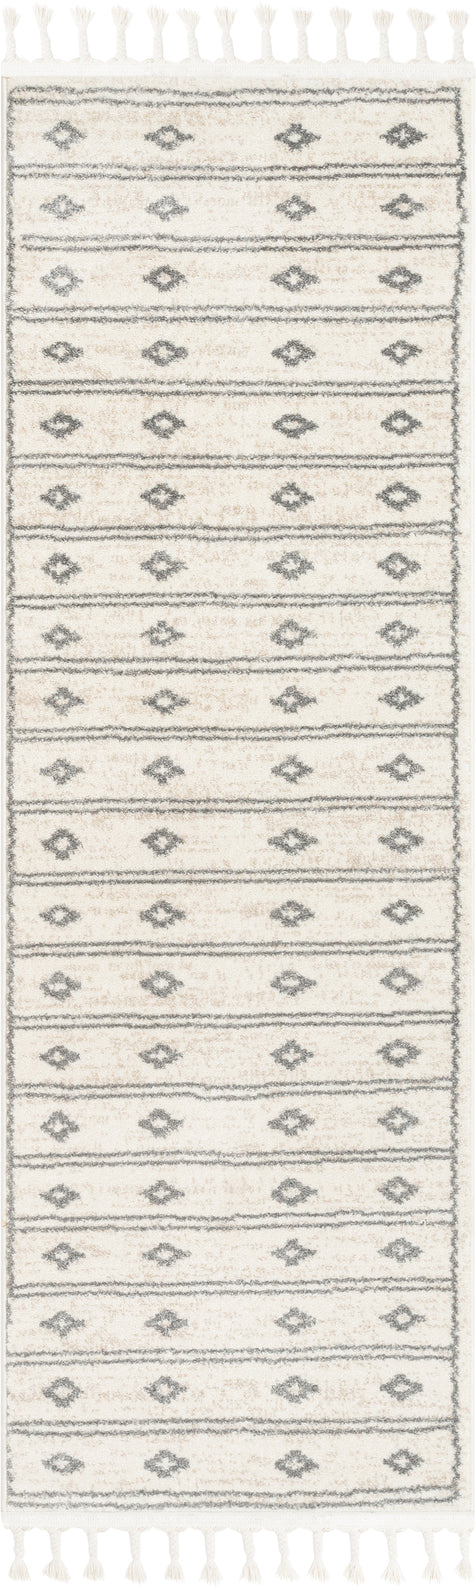 Parallel Moroccan Tribal Diamond Pattern Ivory Grey Rug